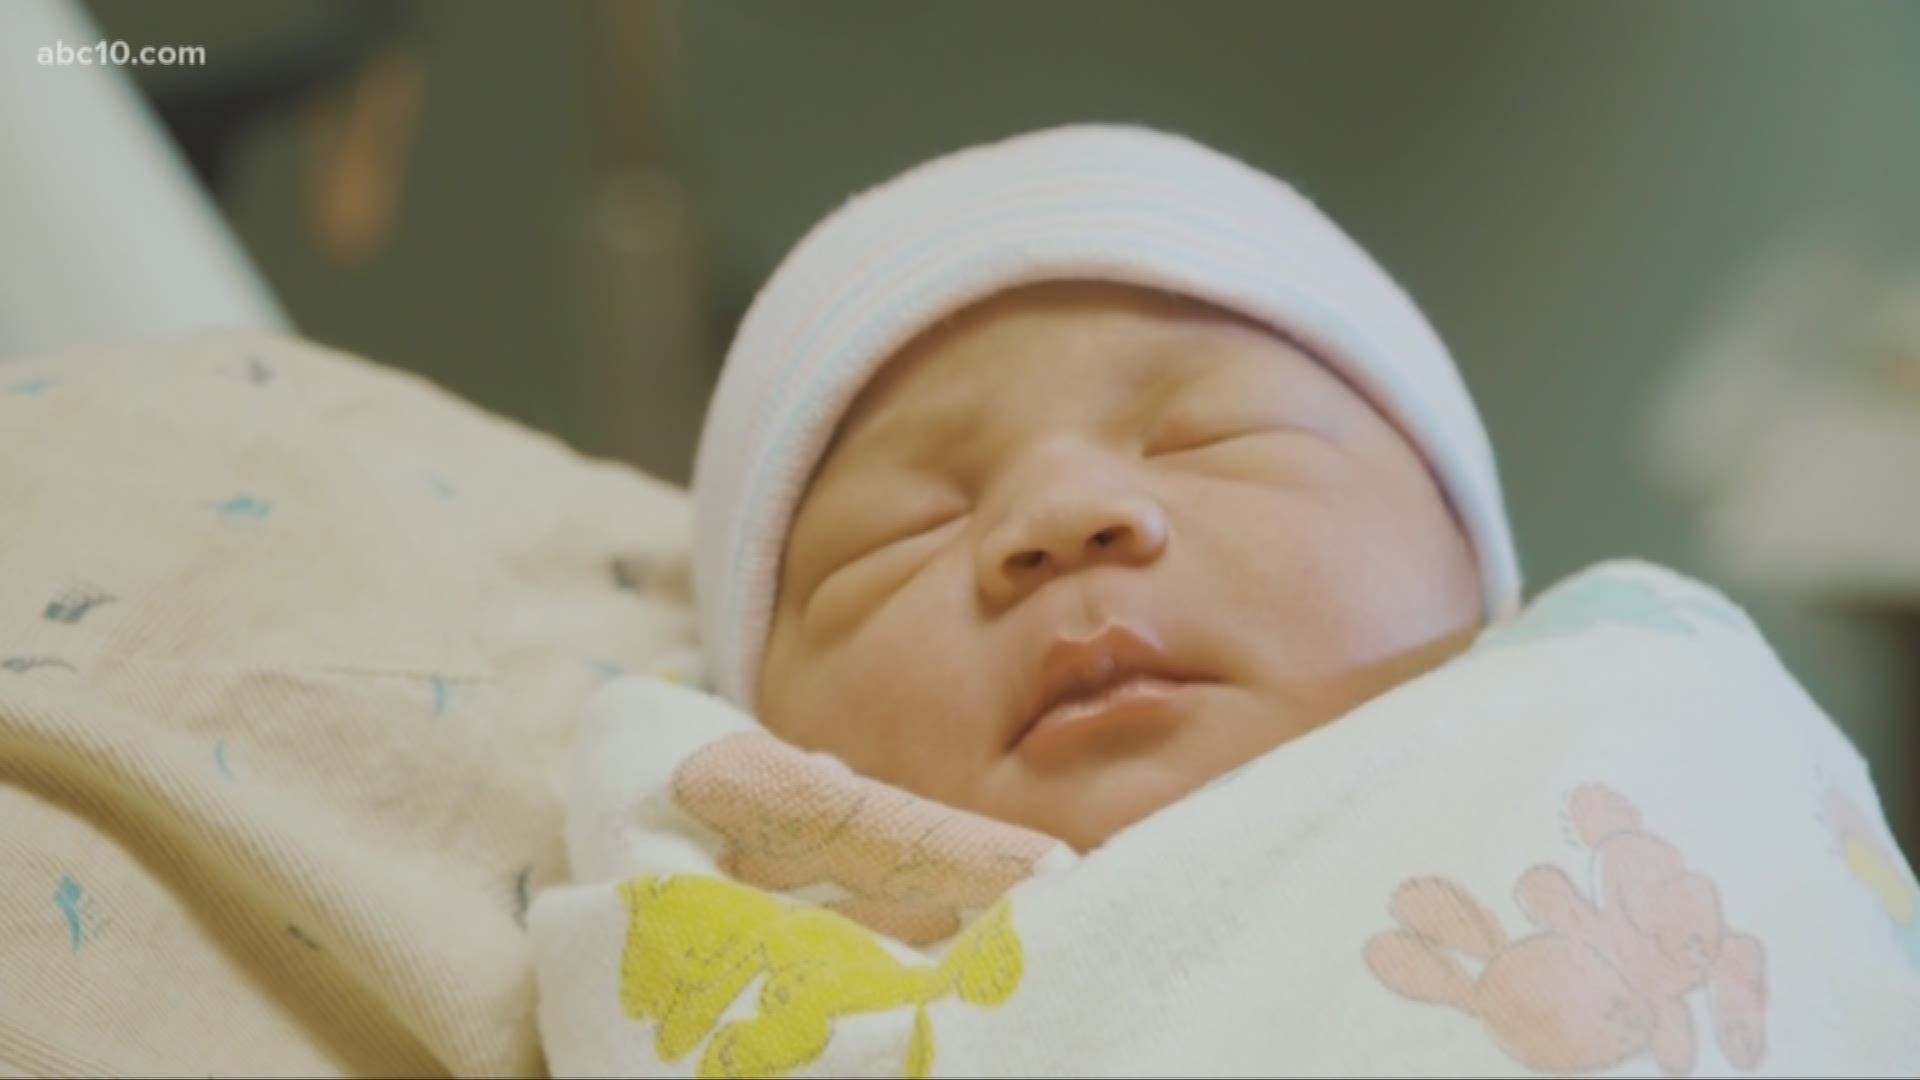 Messiah Mosa’ati Talakai Smith was born to Georzalanda and Jerrick Smith at 12:08 a.m. Jan. 1 making him the first baby born in the Sacramento region in 2020.